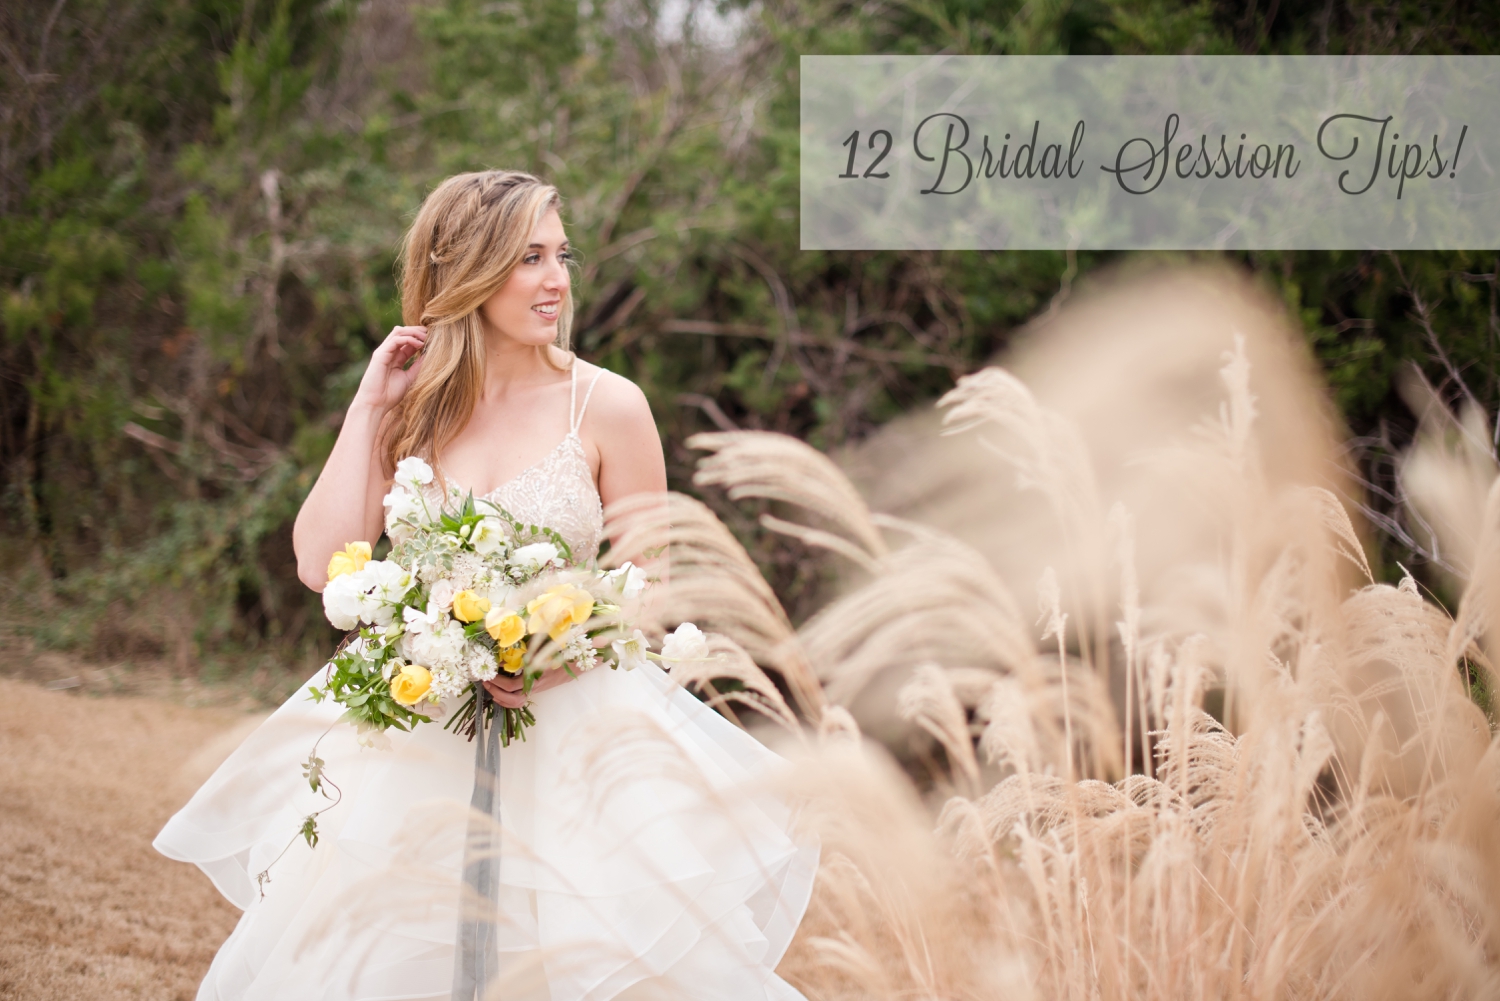 Bridal Session Tips Blog Bride and Groom Wedding Love